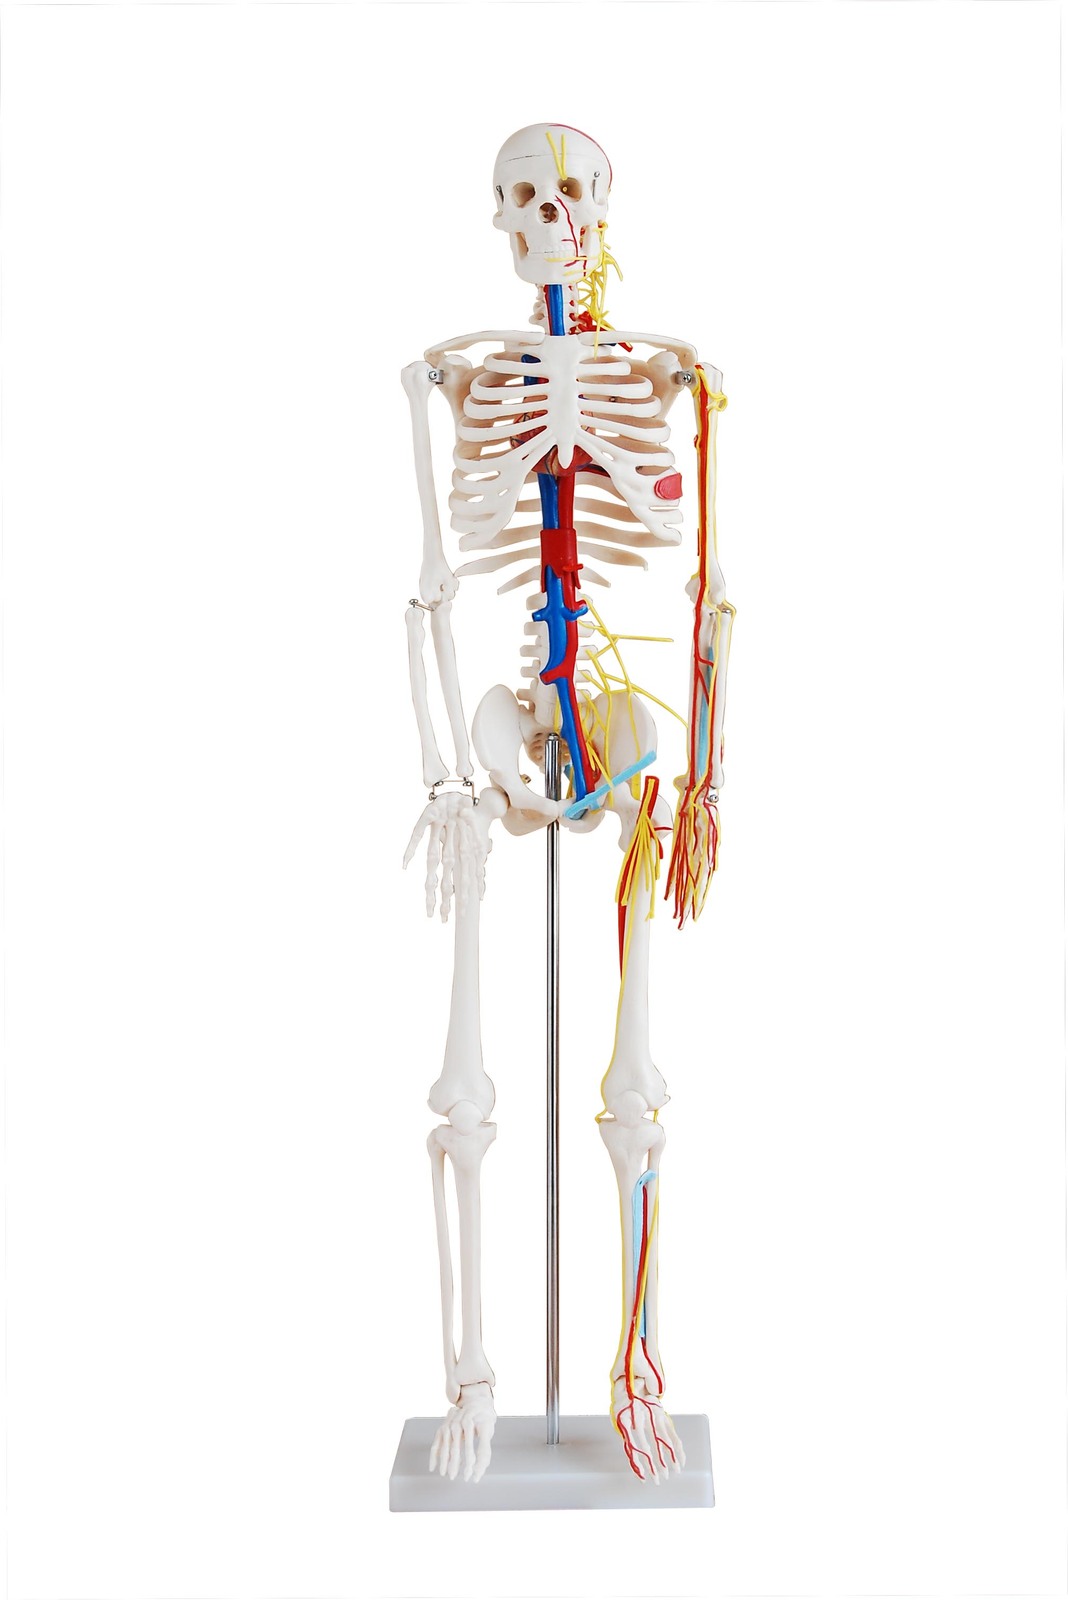 Human Shoulder Joint Simulation Anatomy Skeleton Model Kids Teaching Tools